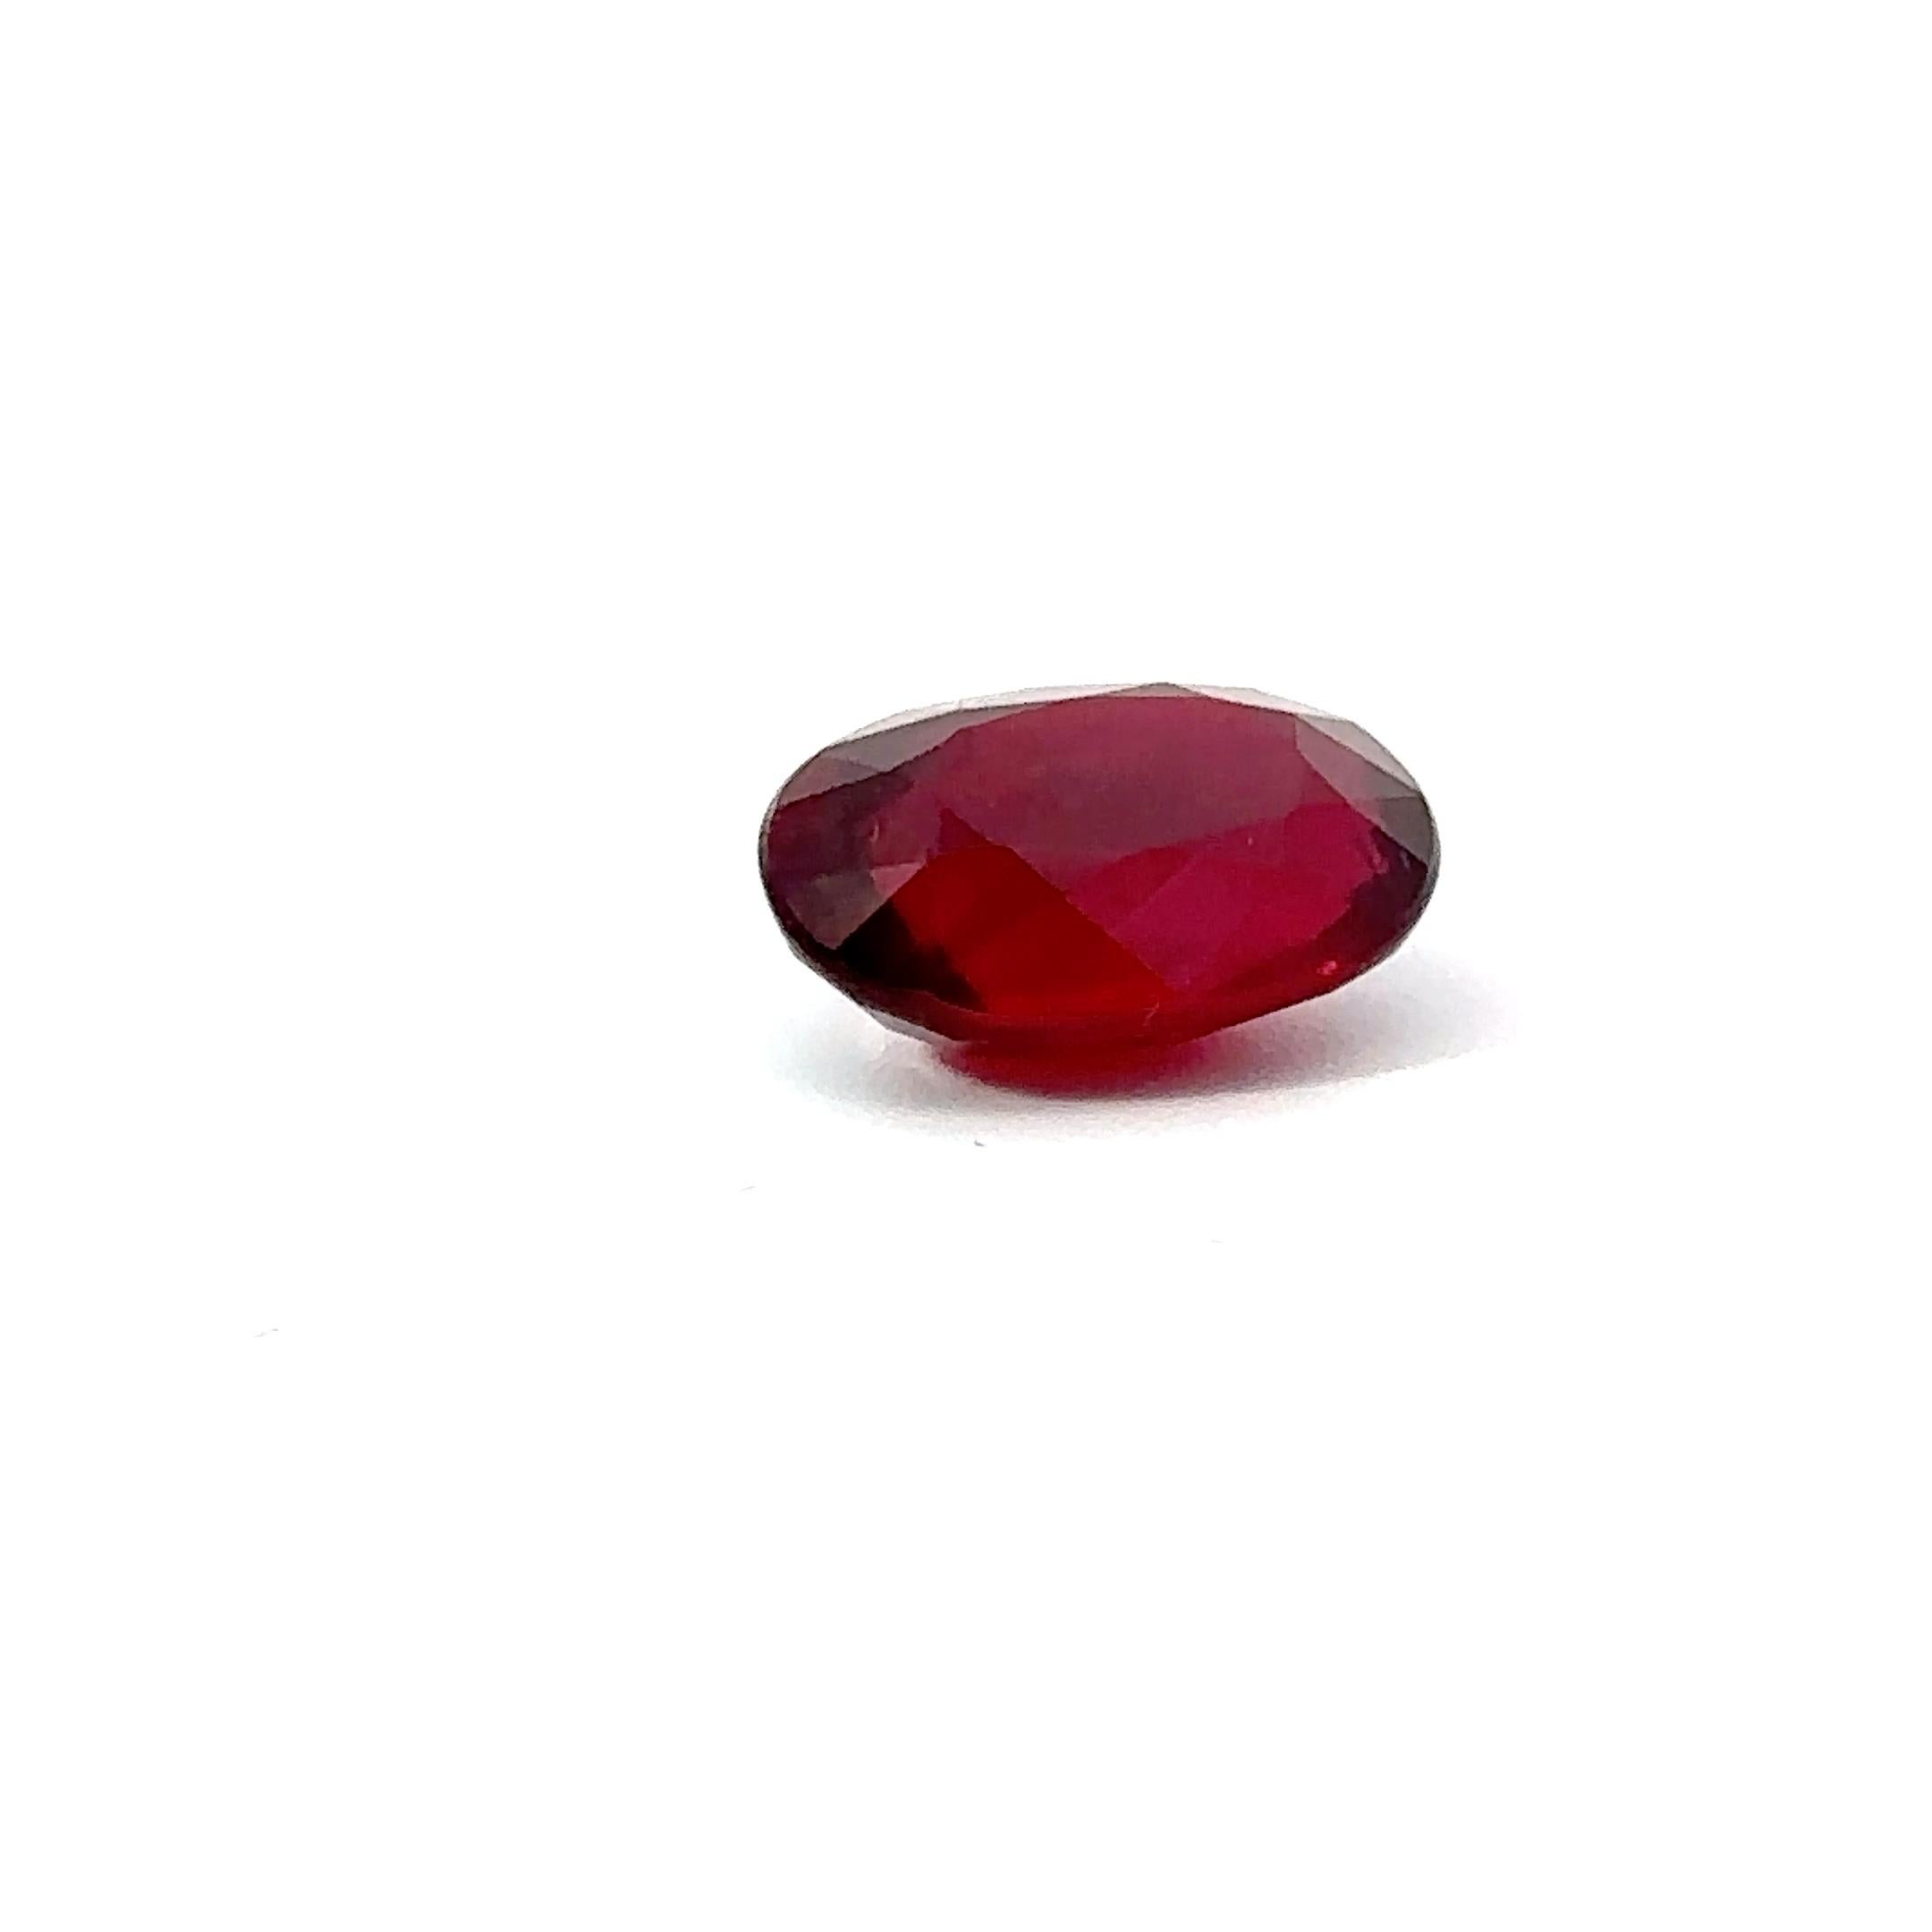 Taille ovale Rubis certifié GRS de 4,15 carats (de forme ovale) en vente